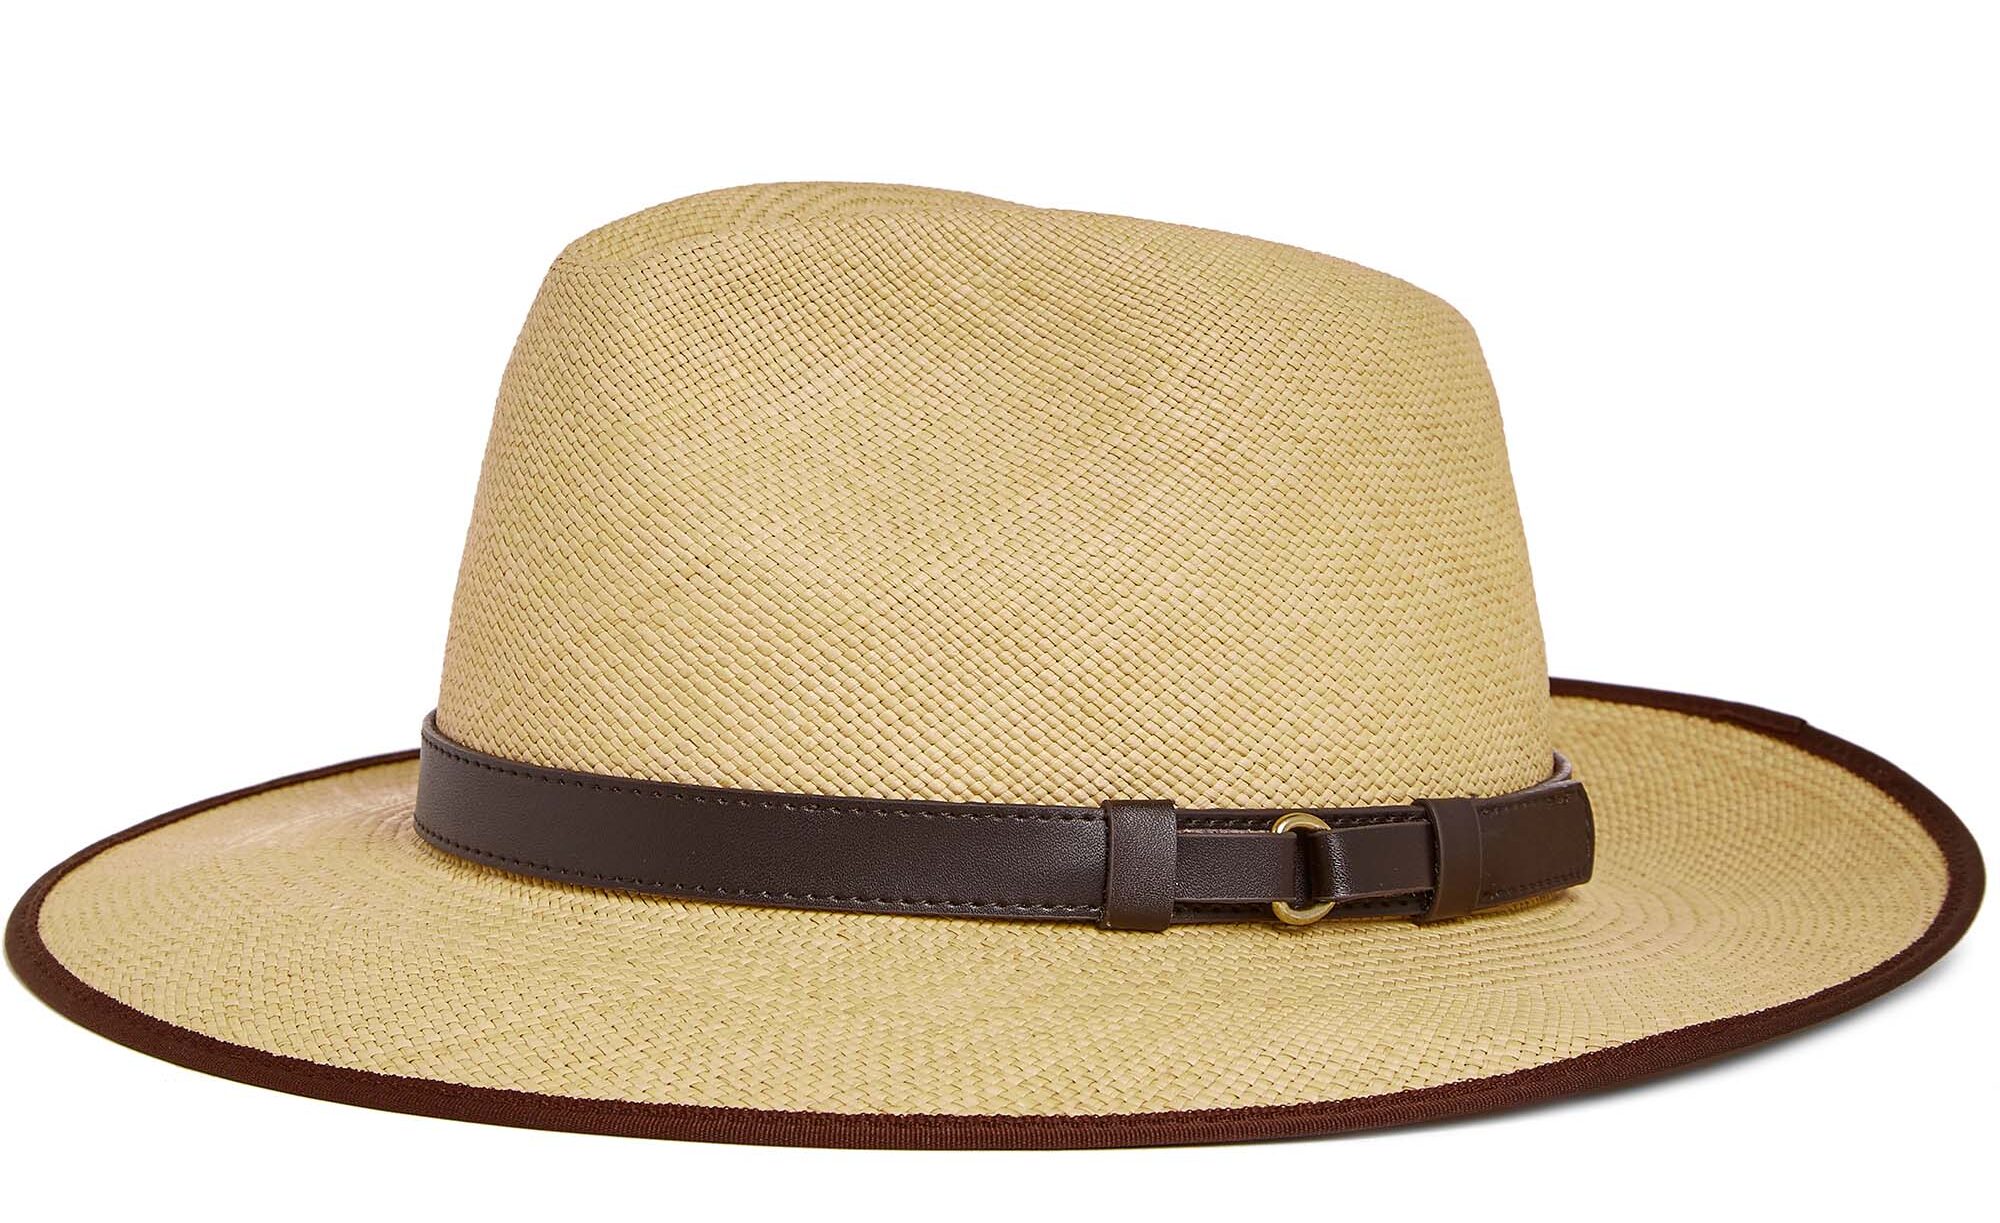 Purdey Panama hat